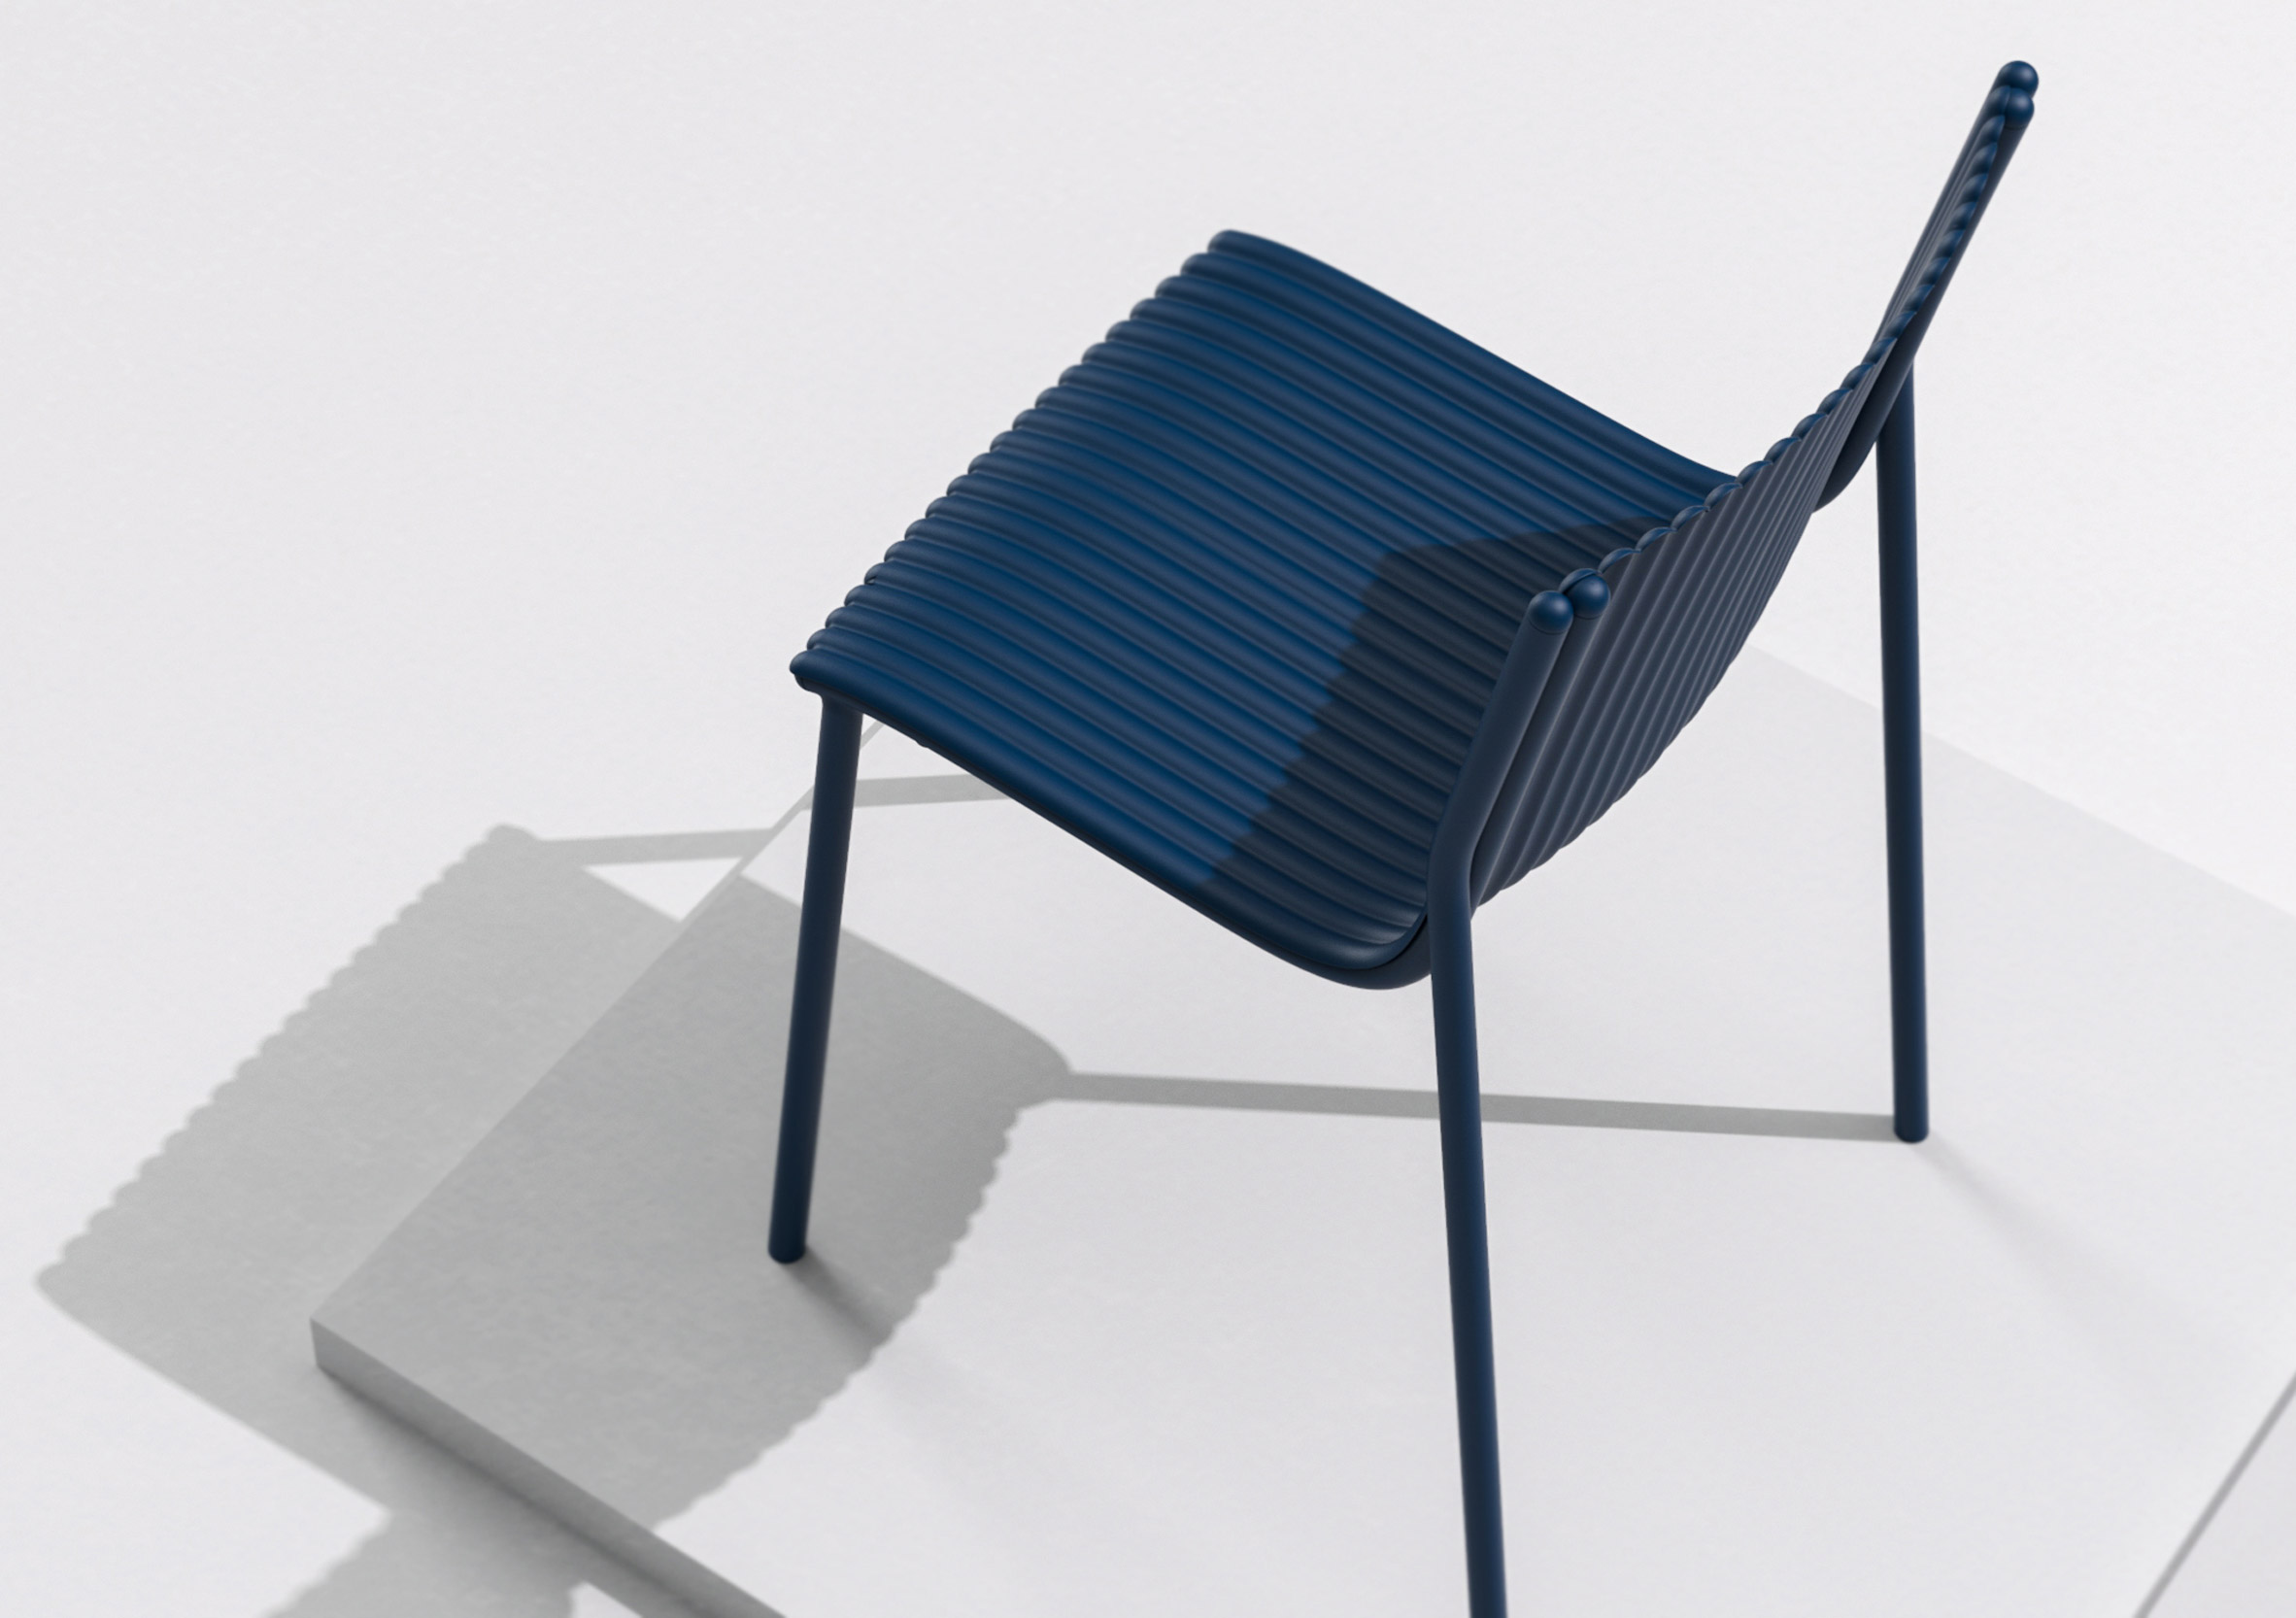 Ilseop Yoon creates pleated chairs from sheets of aluminium